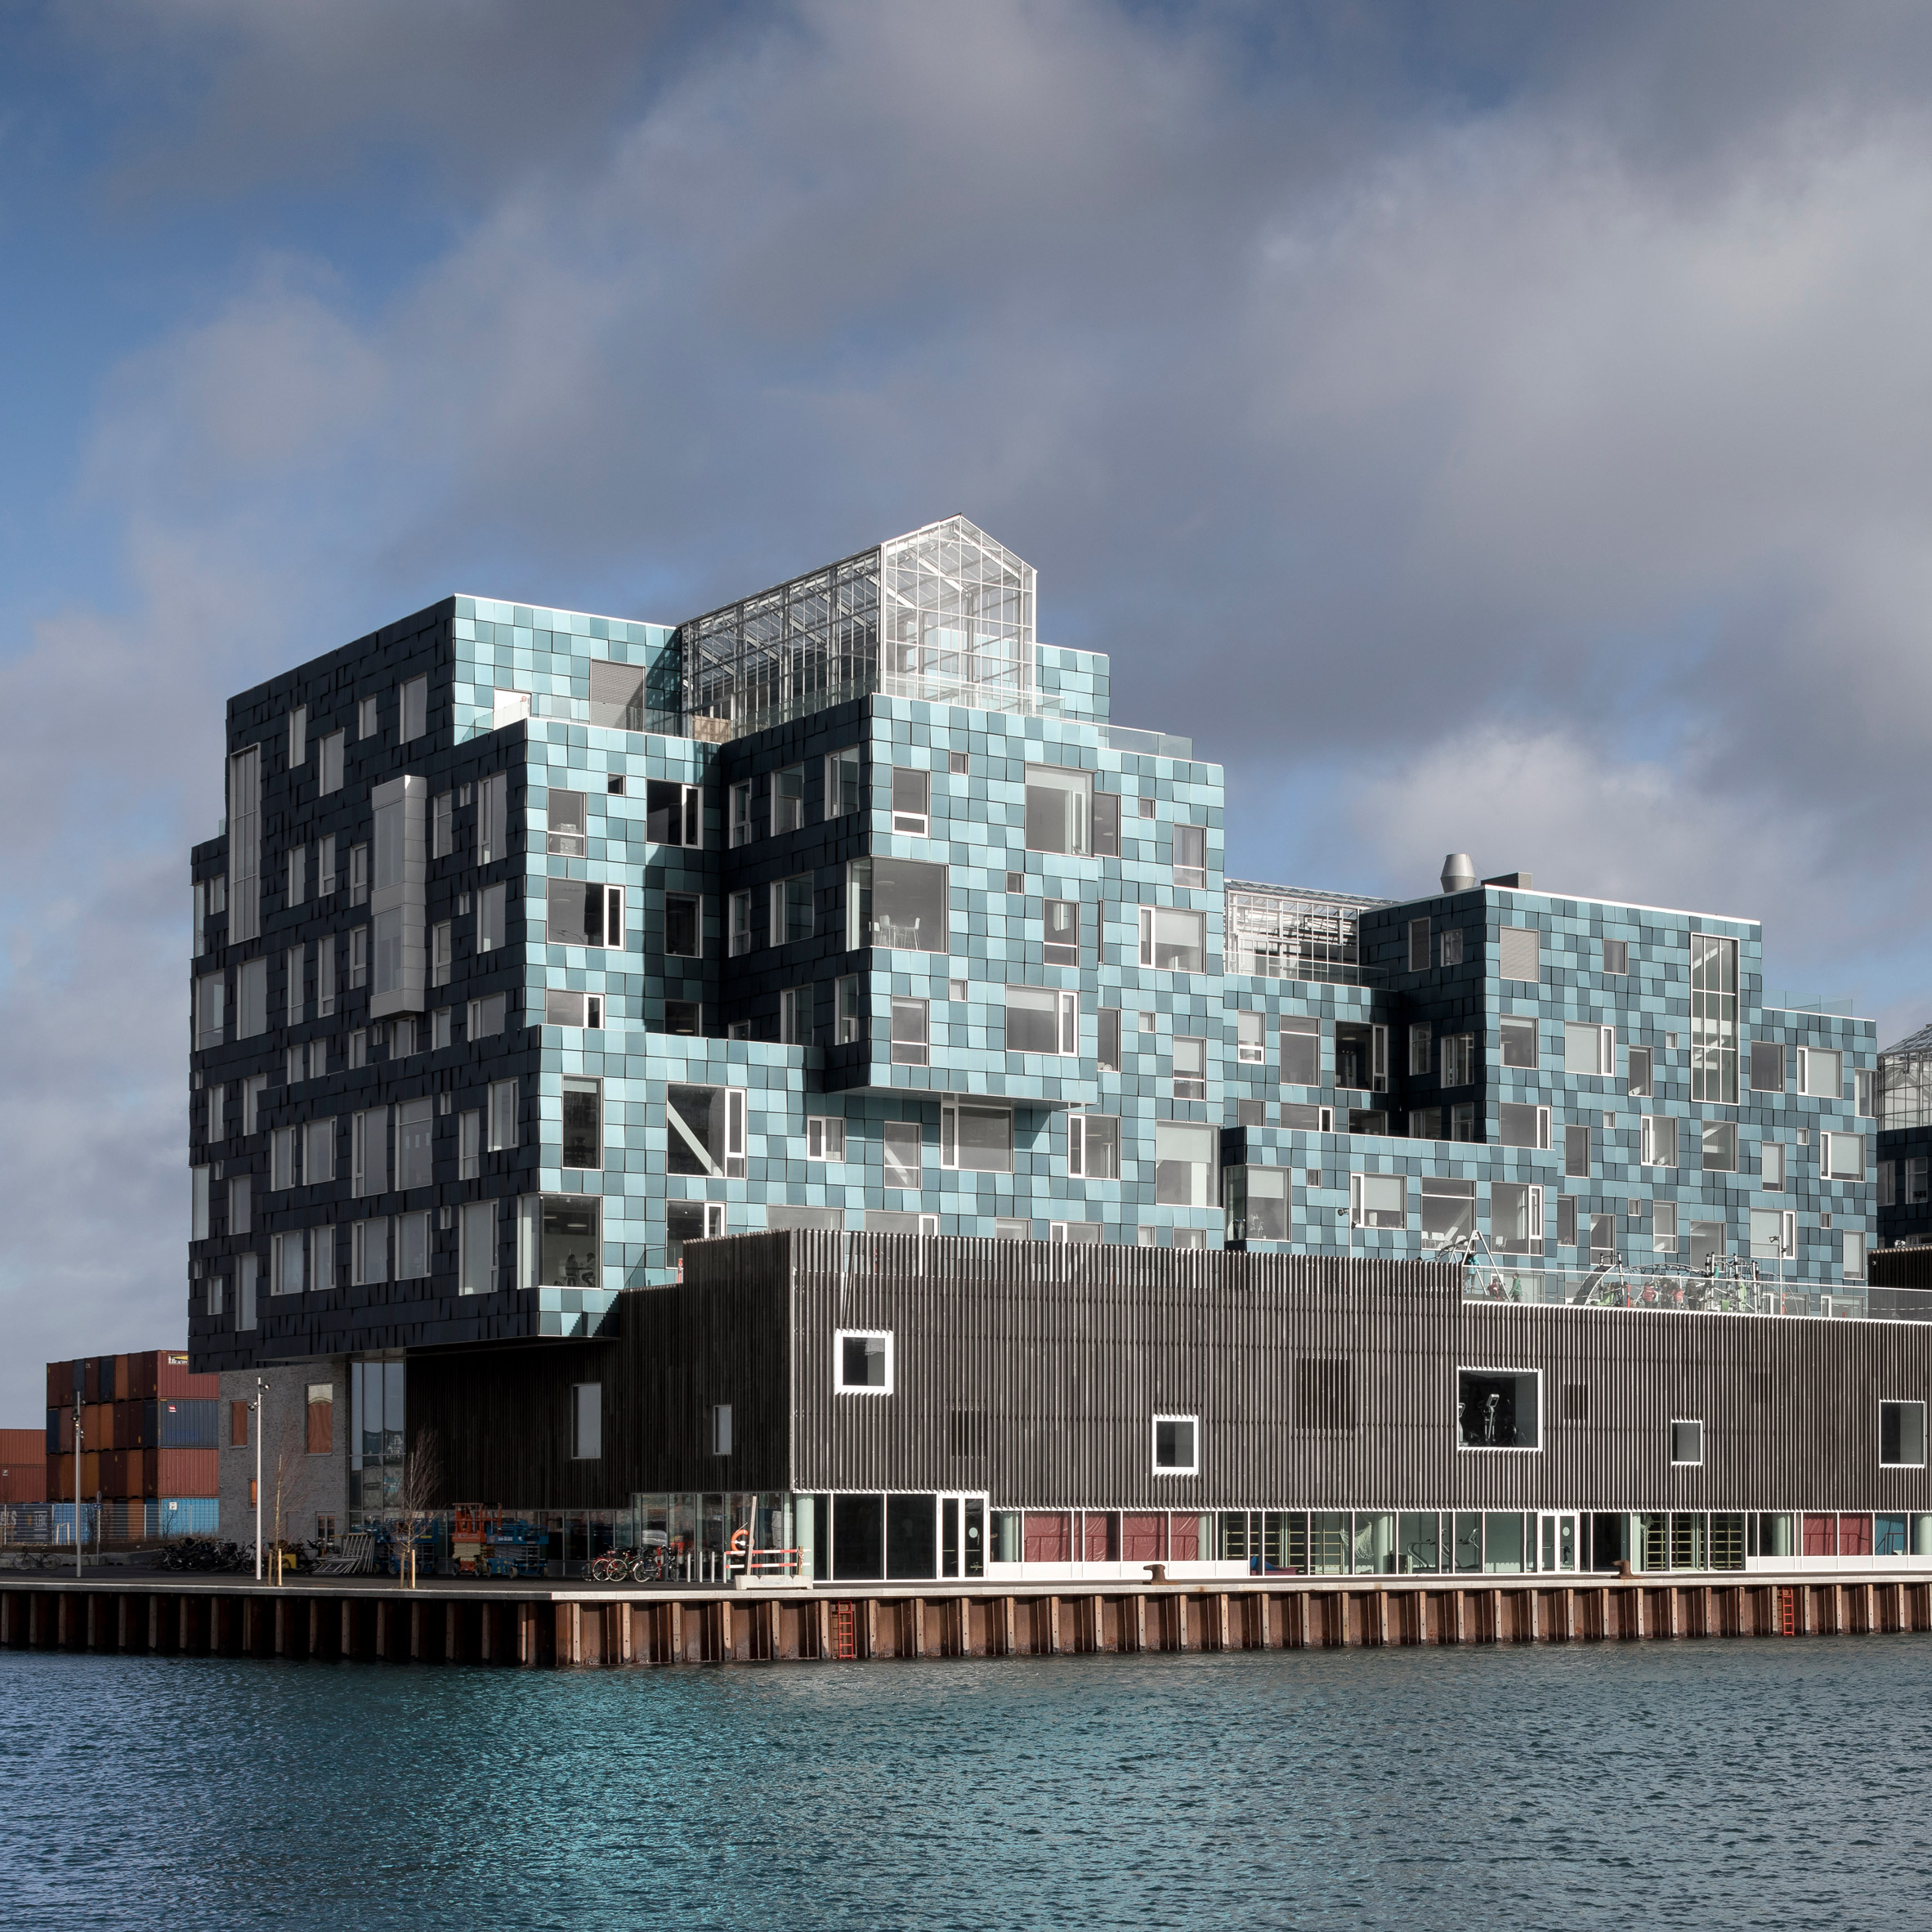 Stacked exterior of Copenhagen International School by C F Møller Architects